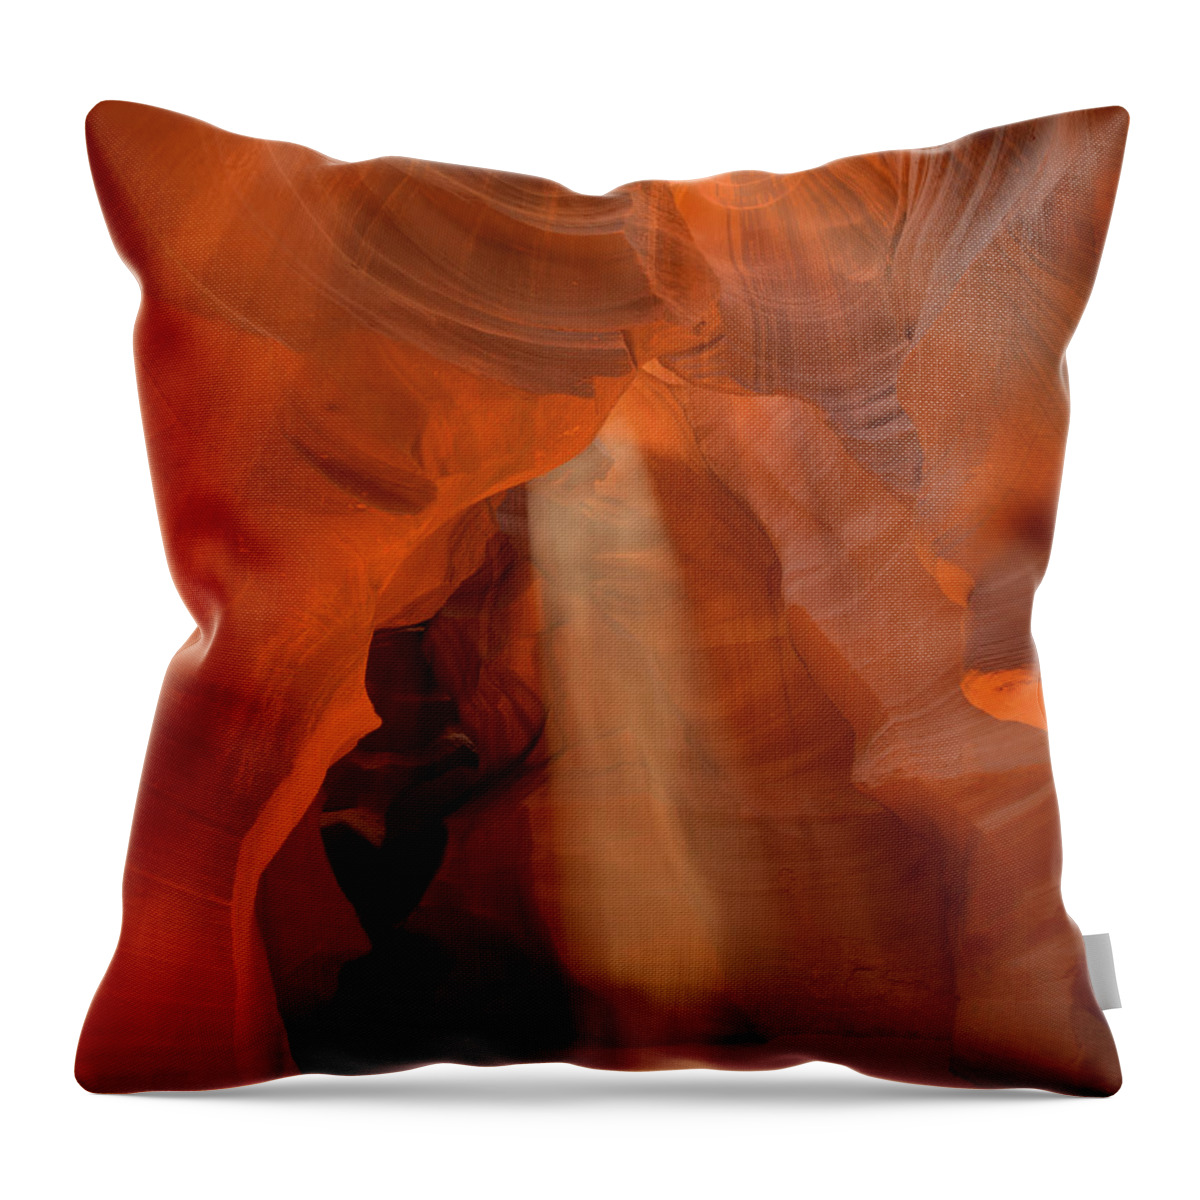 Rock Throw Pillow featuring the photograph Antelope Canyon Spirit Dance-11 by Alan Vance Ley